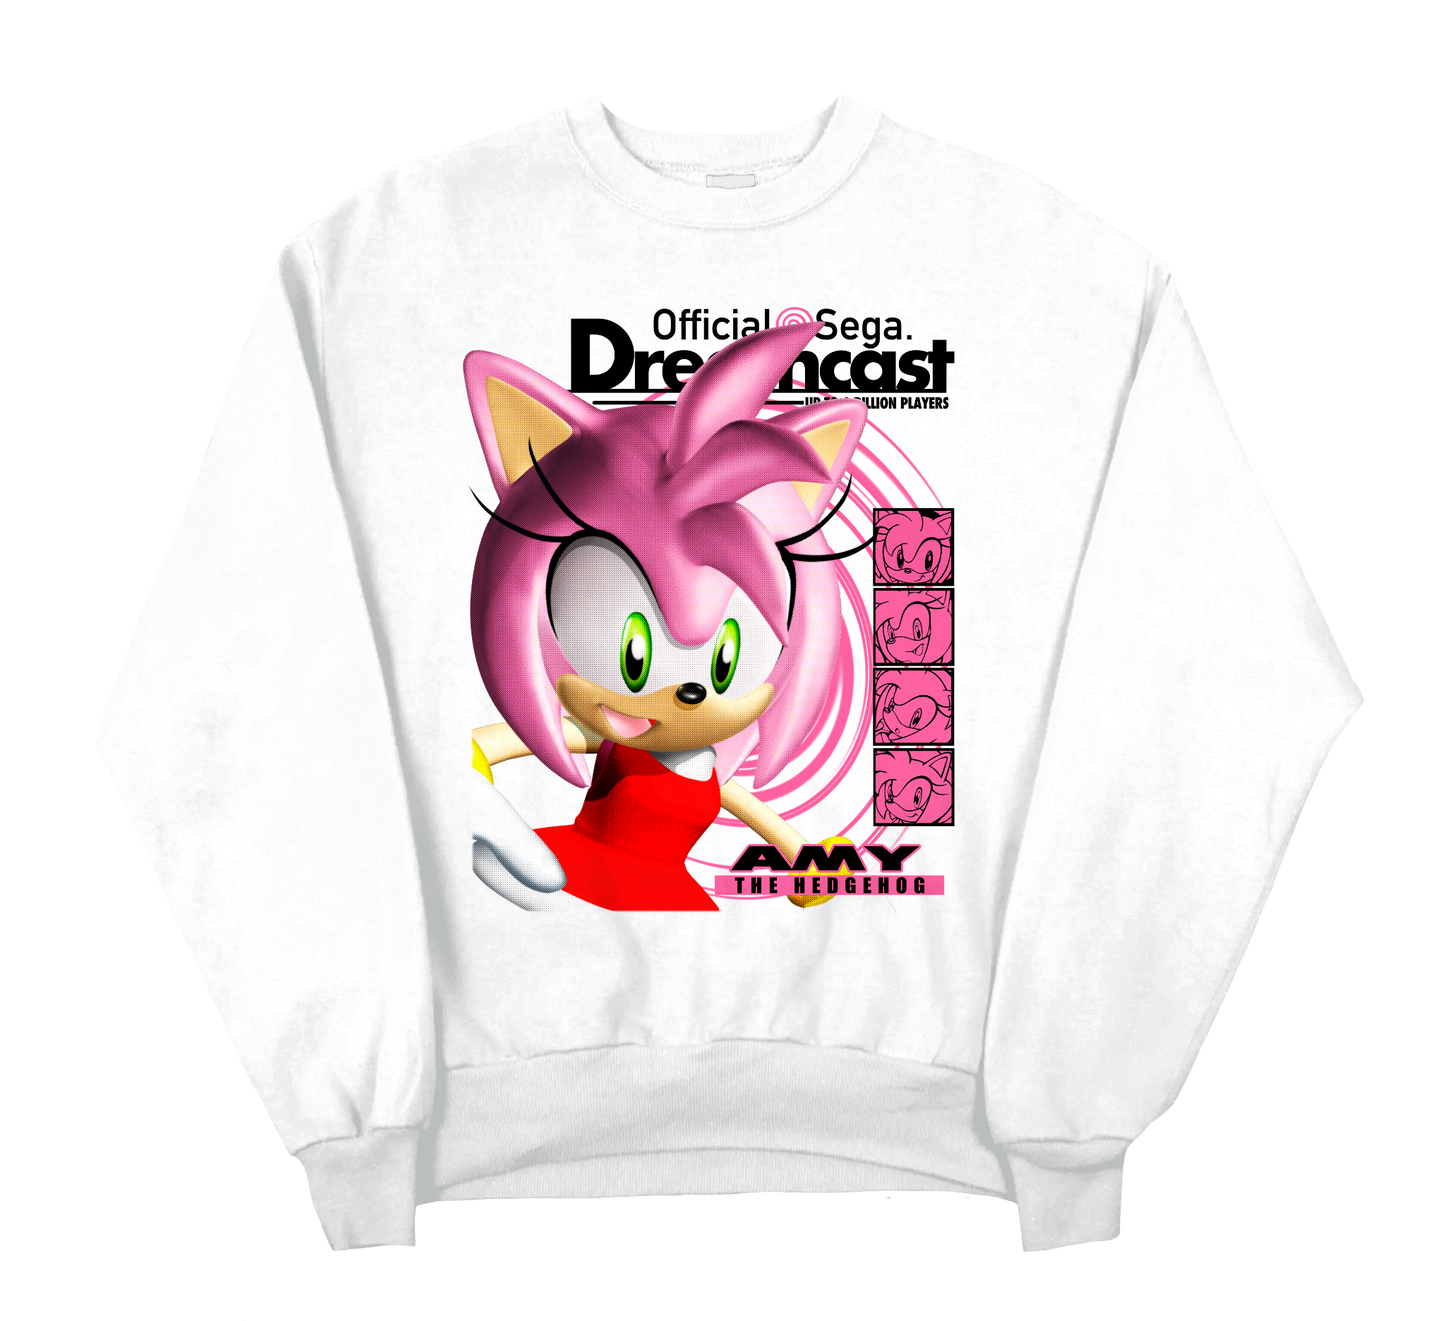 Rosie’s Magazine (Sweatshirt)